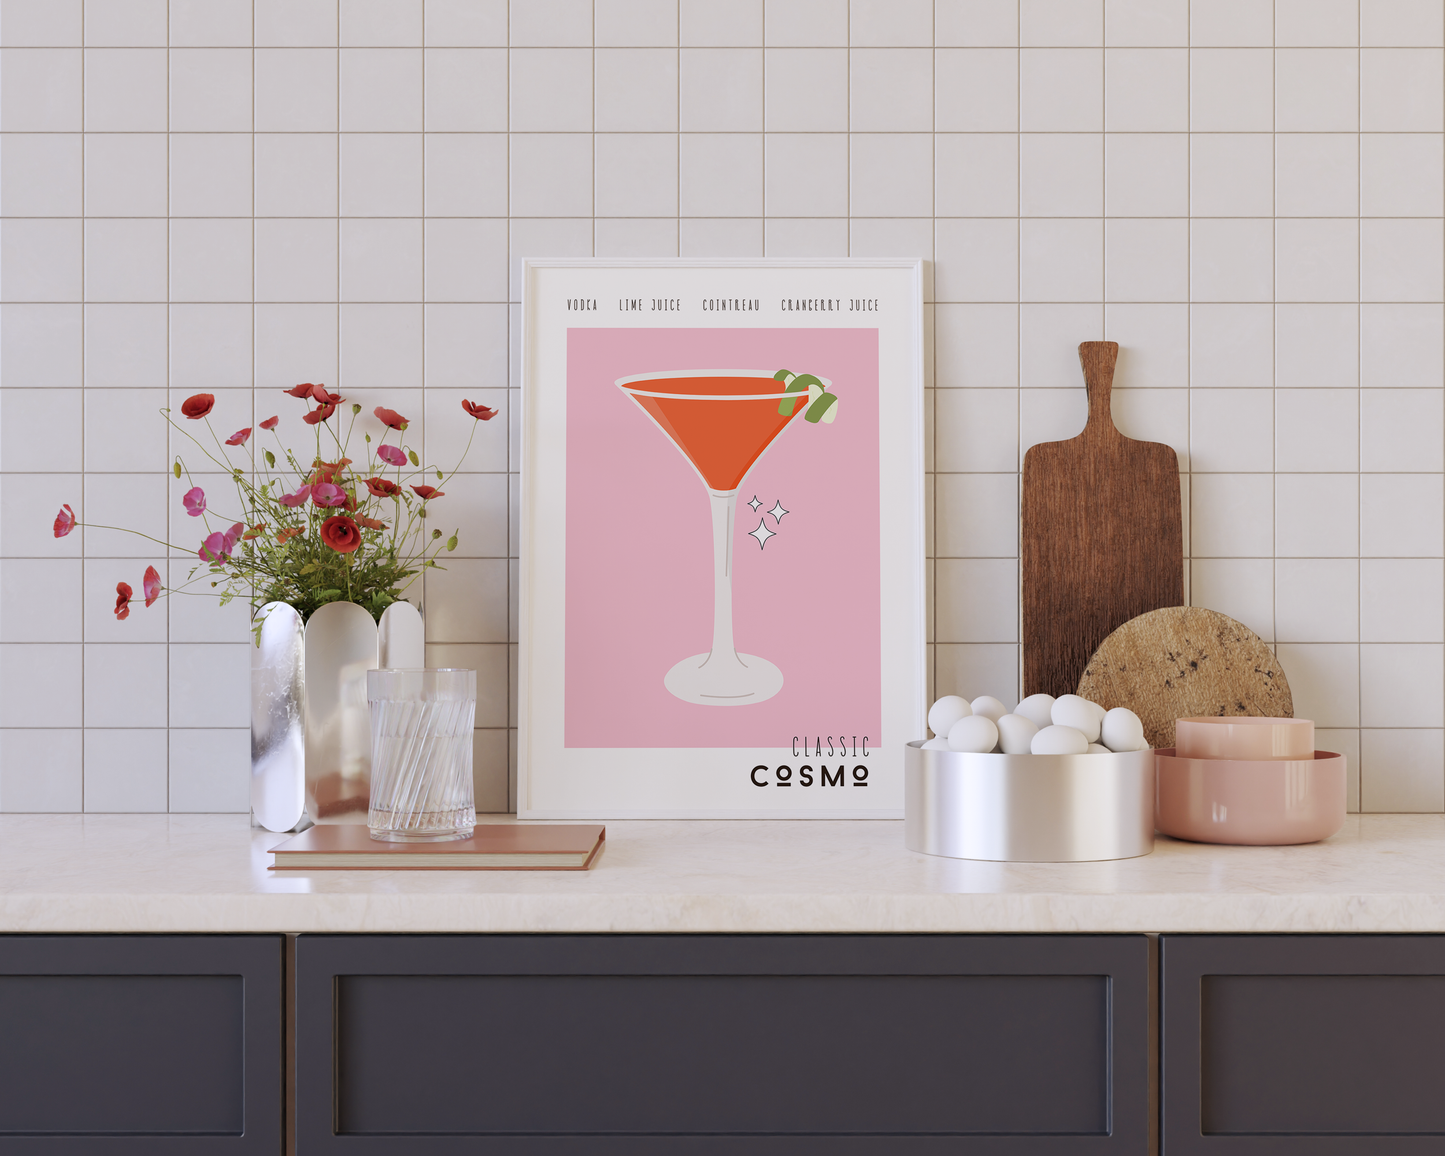 Cosmopolitan Cocktail Poster